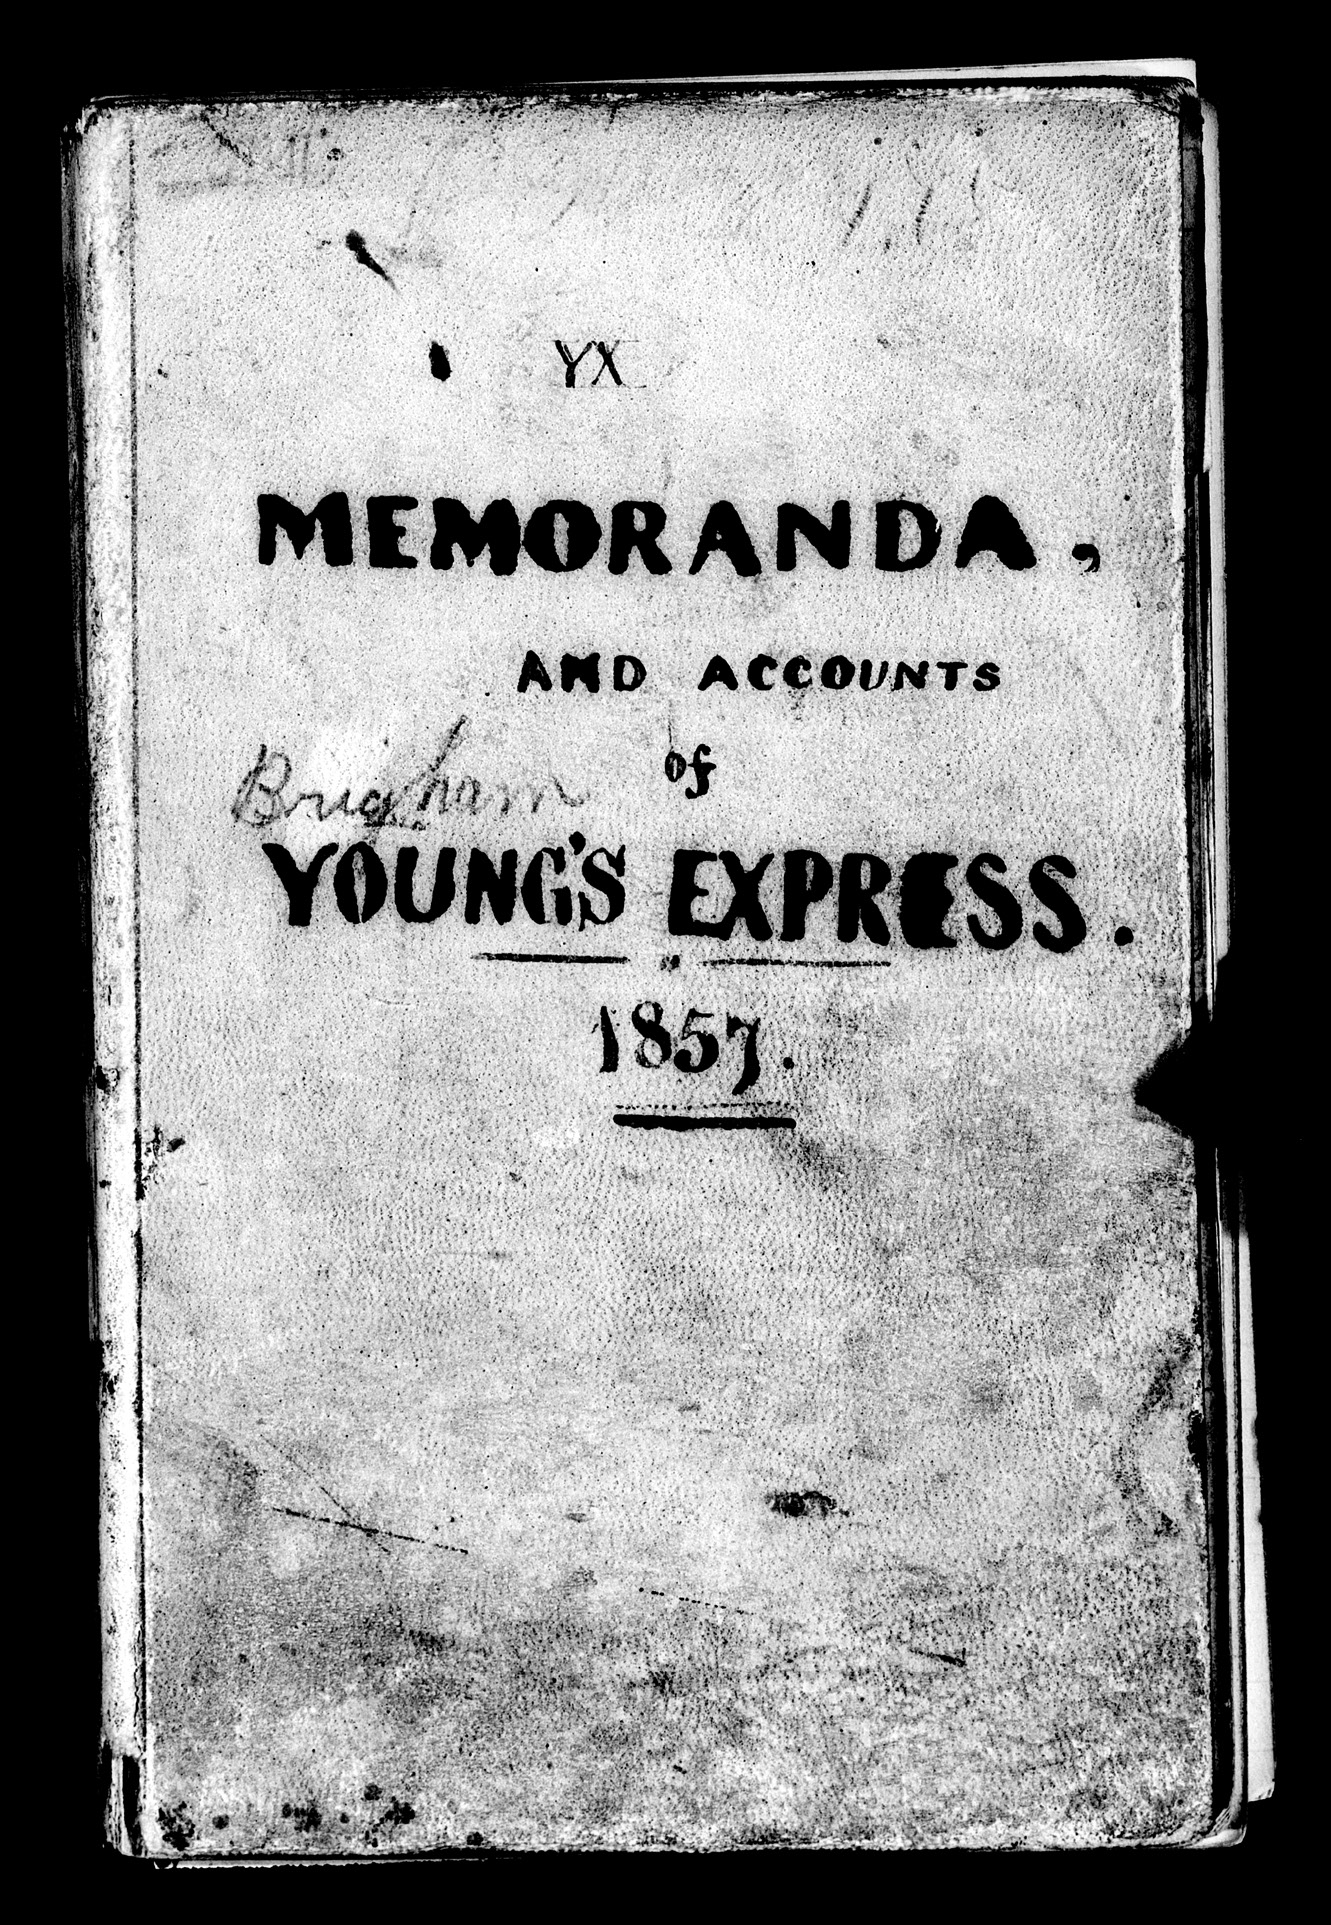 YX Memoranda, and Accounts of Brigham Young’s Express, 1857. Brigham Young office files, Brigham Young Express and Carrying Company Files, 1857–1860, CR 1234 1, box 83, folder 6, image 2. Church History Library.